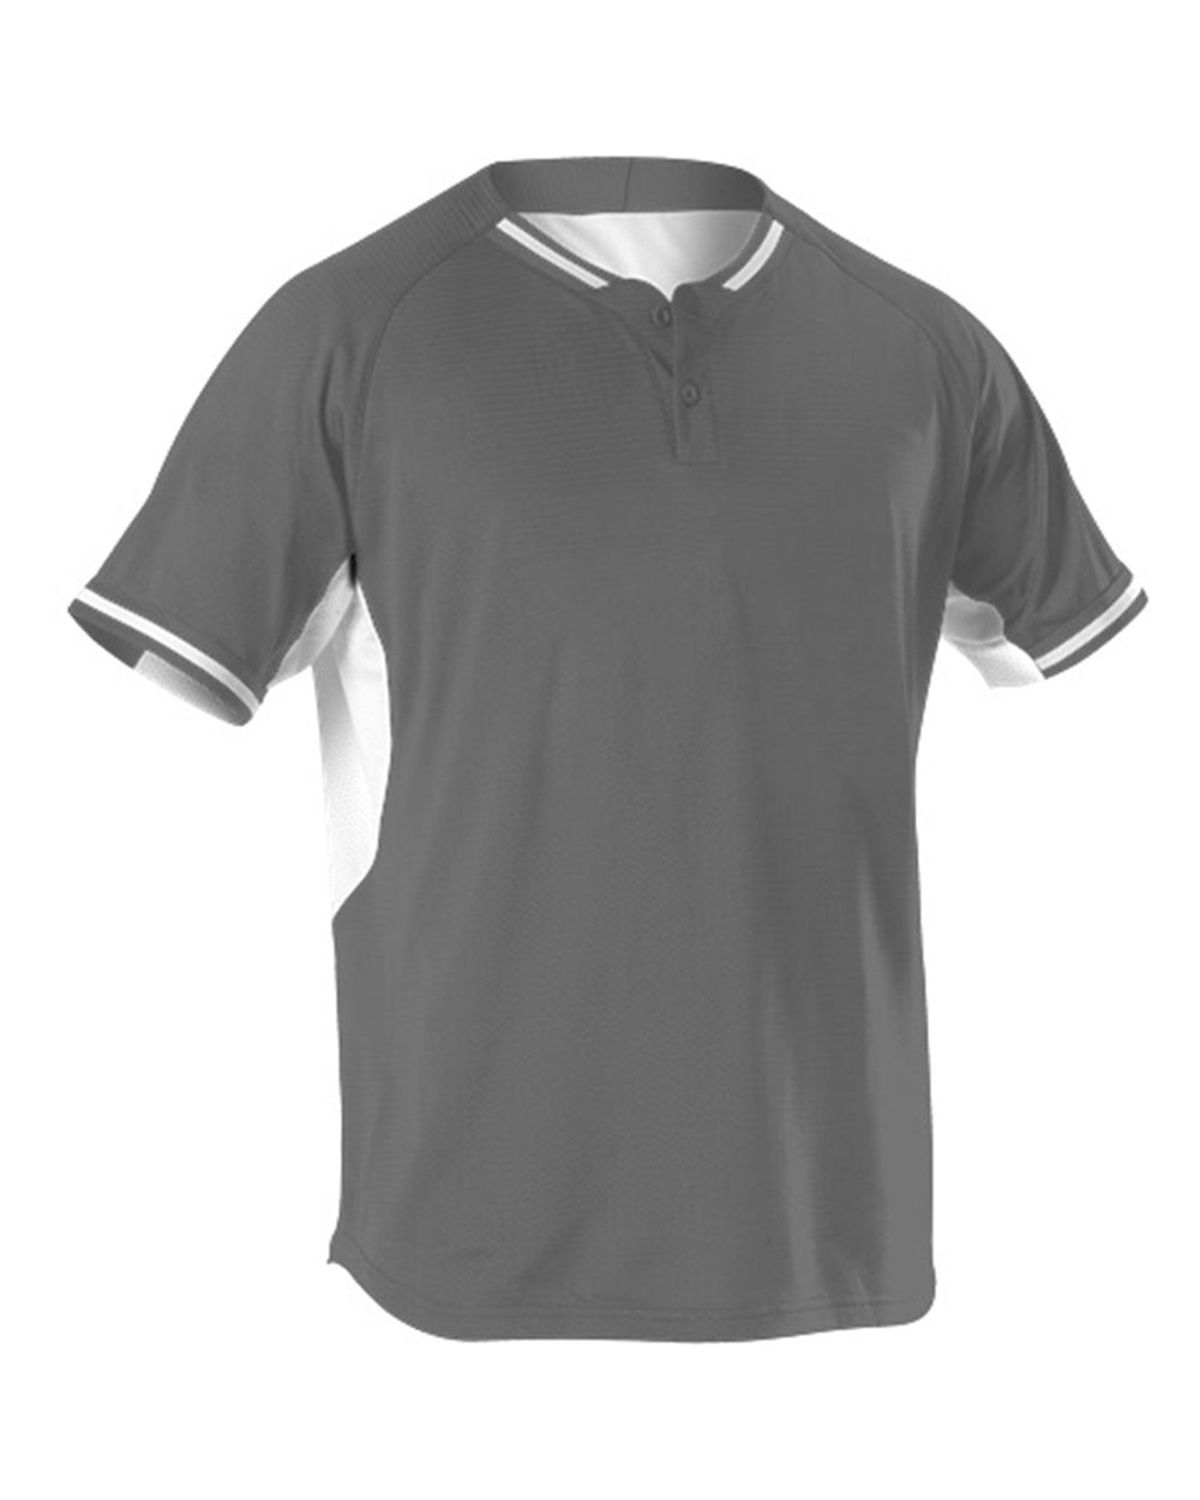 charcoal grey baseball jersey